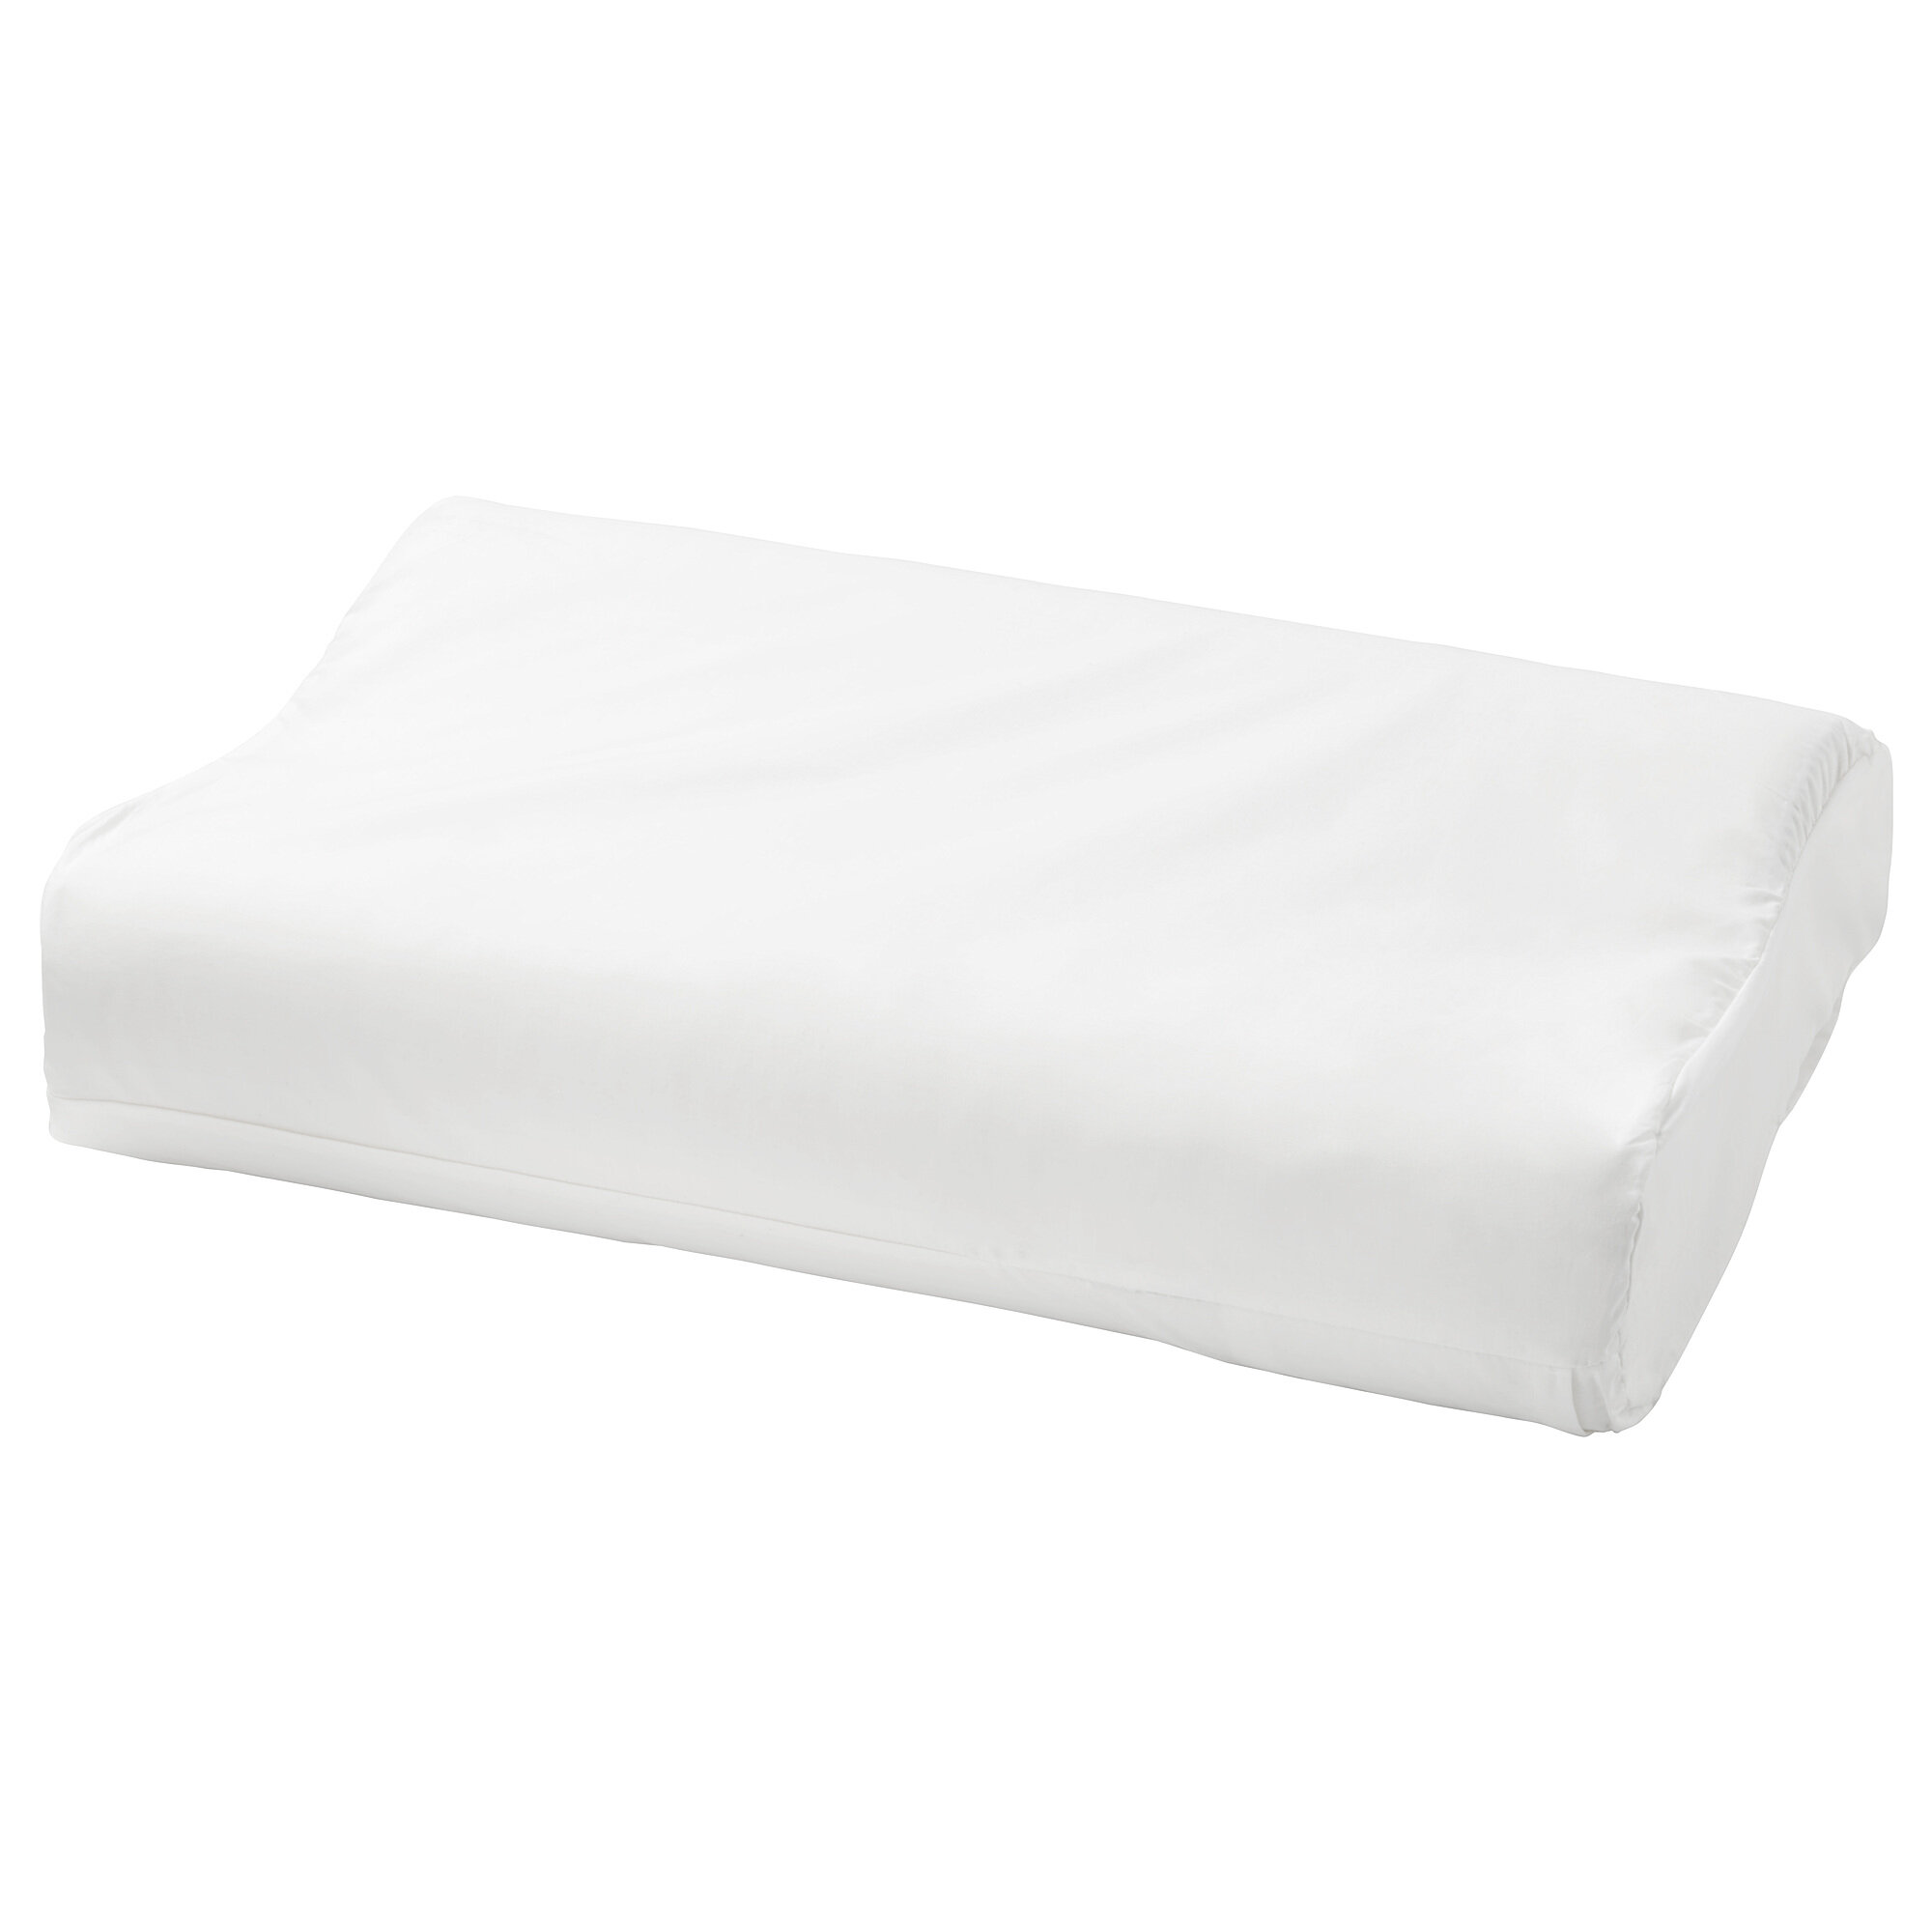 Чехол для подушки икеа розенскэрм 104.443.70 33 х 50 см высота 12 см (IKEA ROSENSKARM)